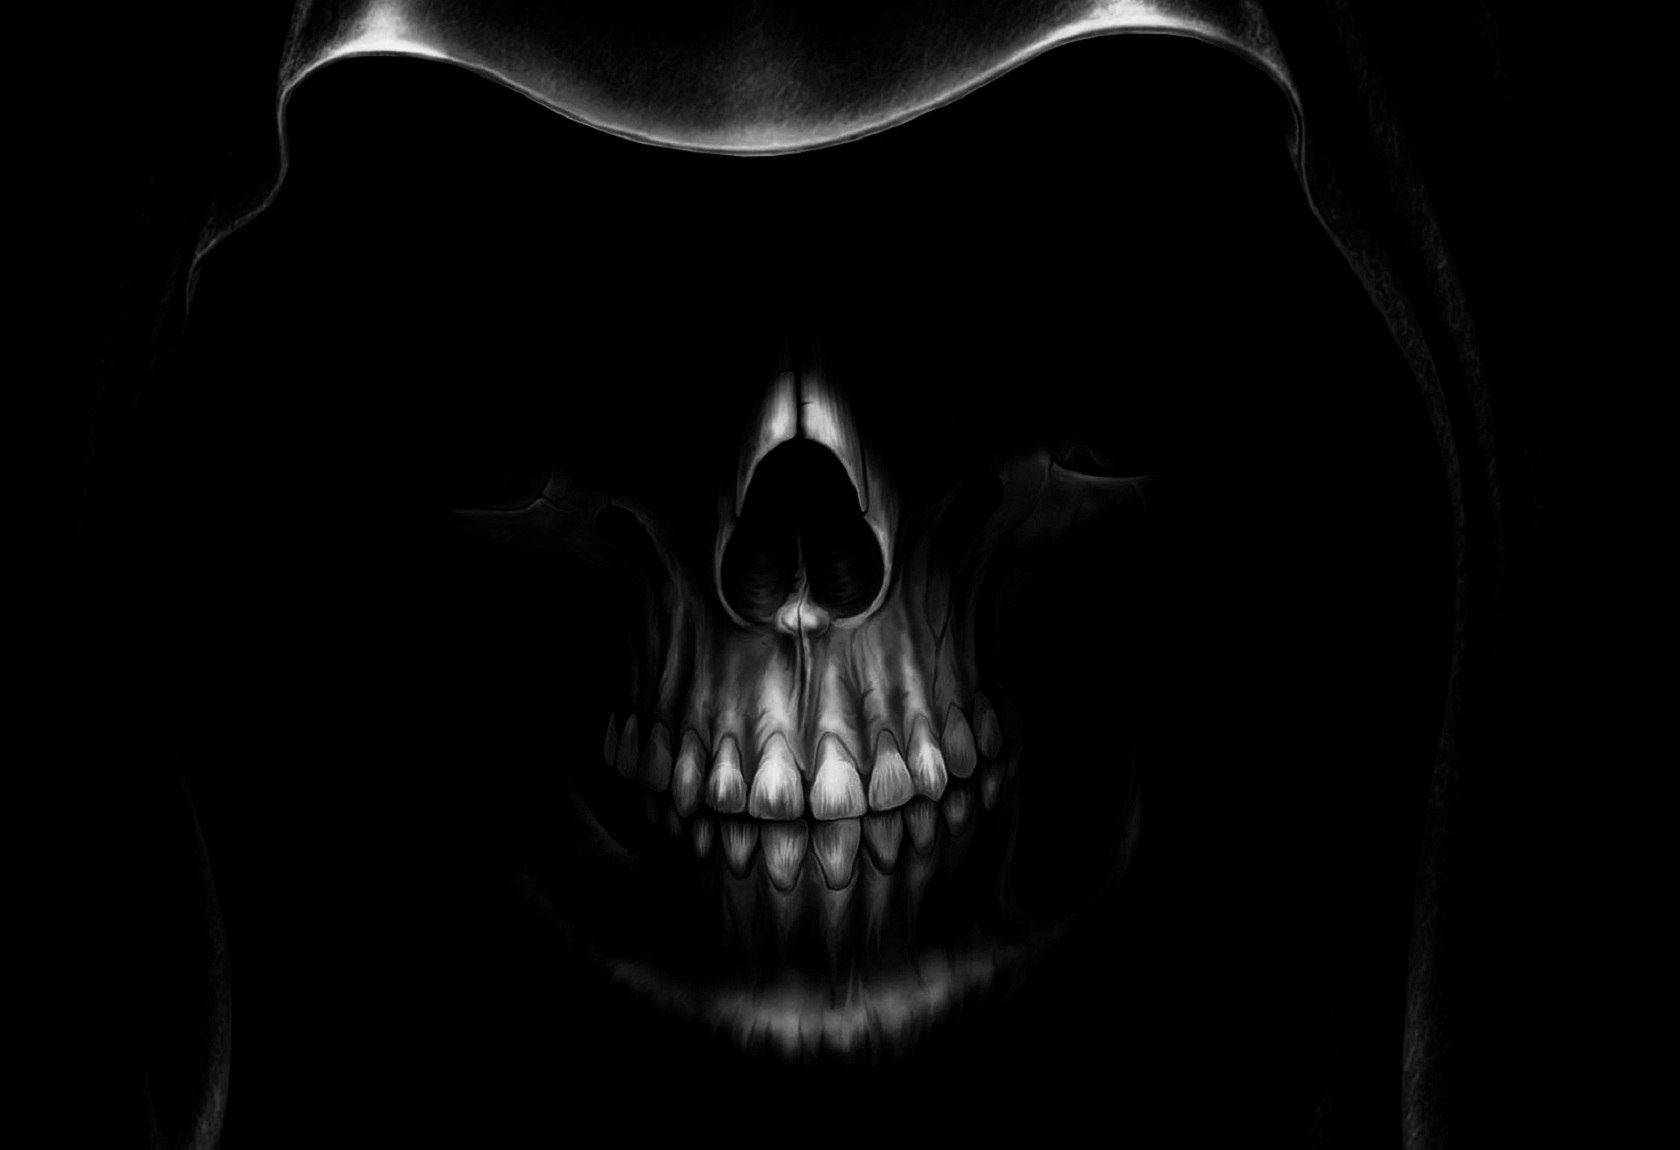 Dark gothic skull skulls reaper grim roses rose death skeleton wallpaper   2560x1600  79451  WallpaperUP